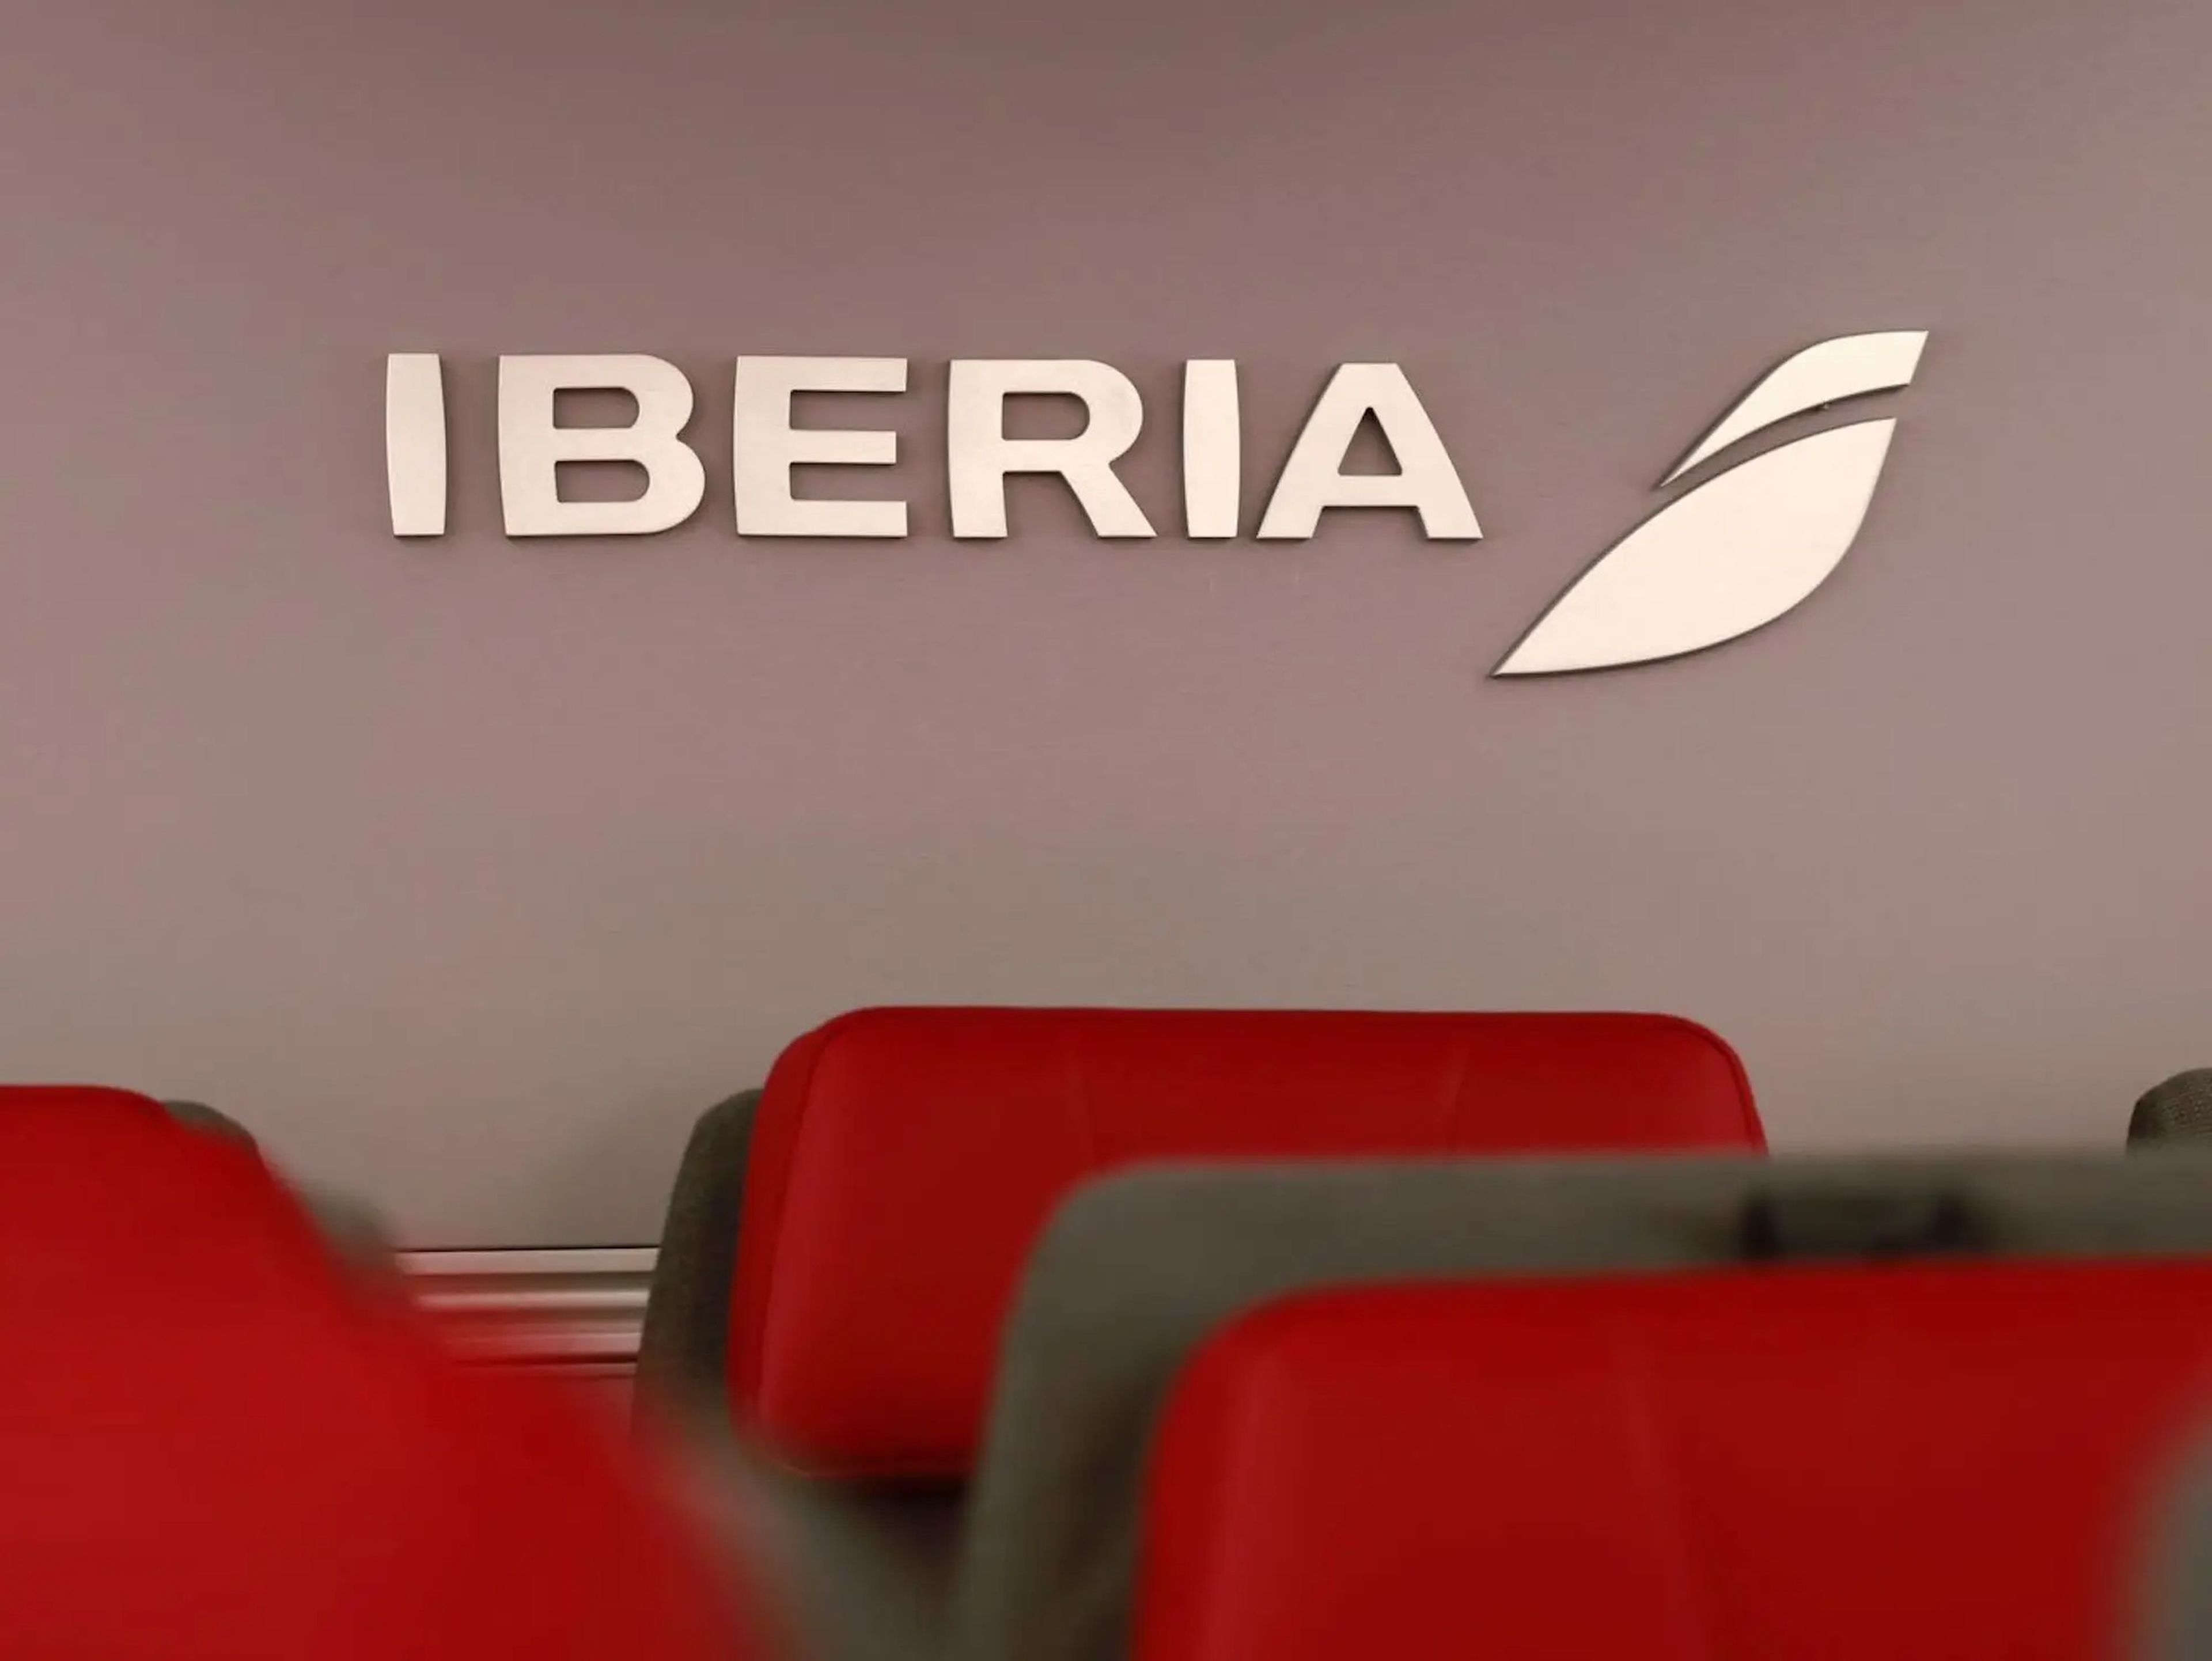 Inside Iberia's new A350-900 cabin.